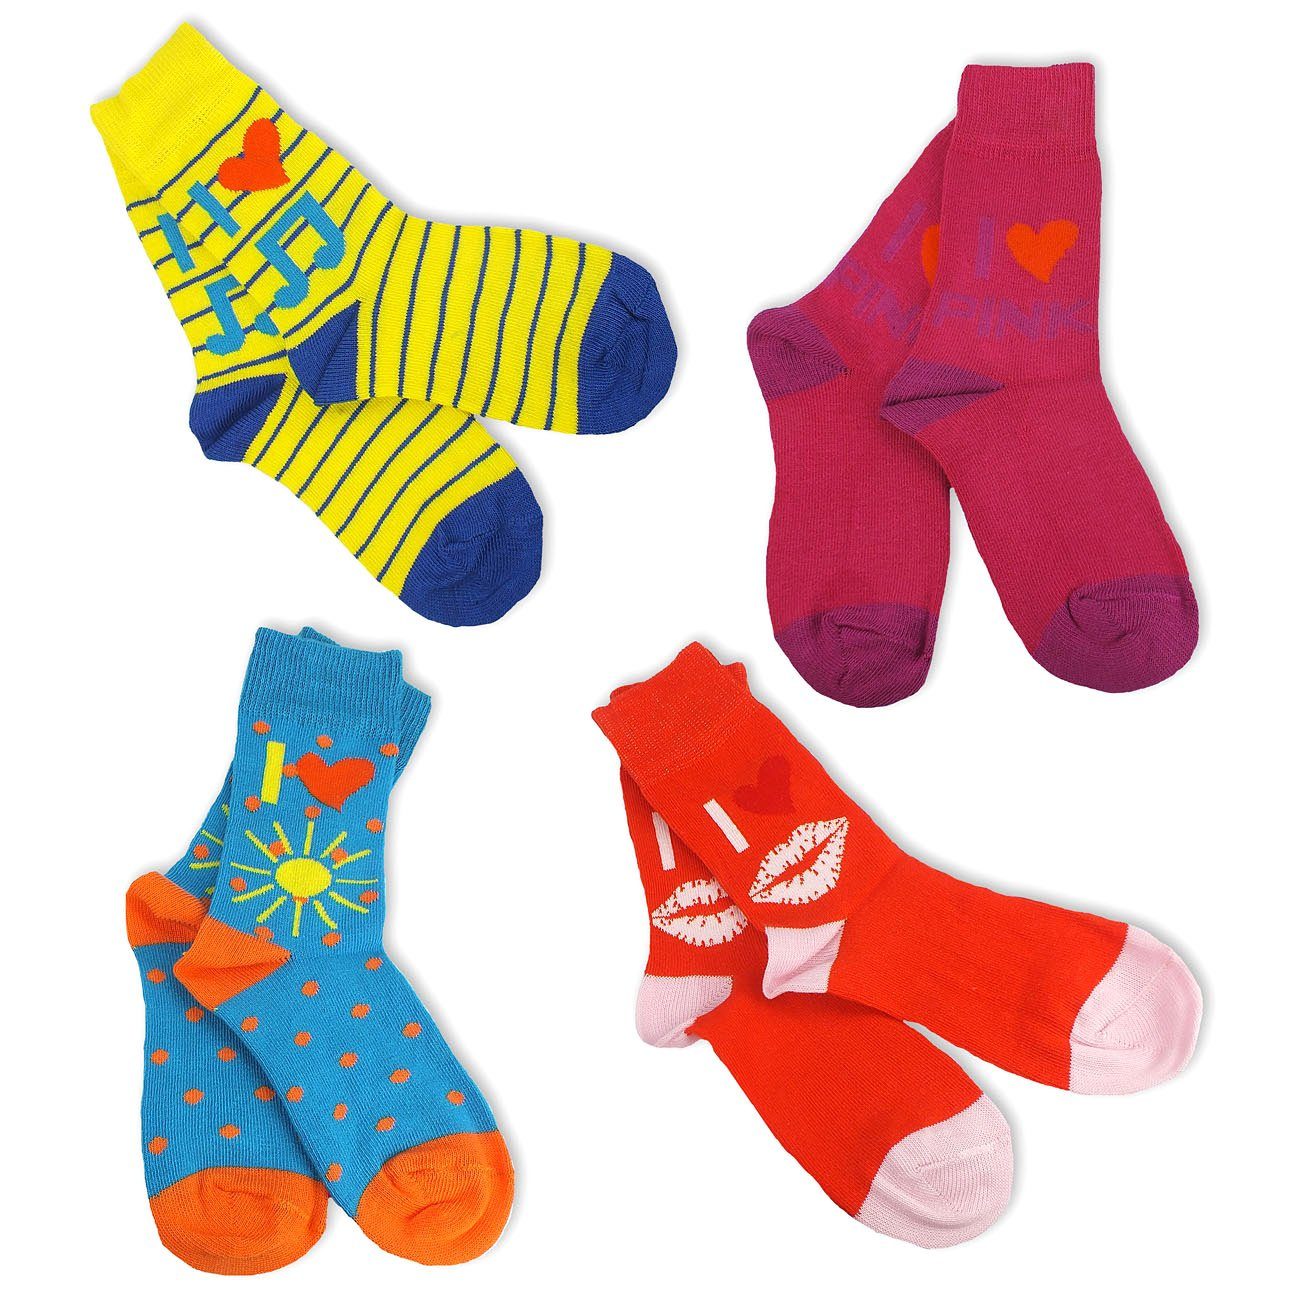 S20228 Kinder mit Baumwolle, (Set, Socken, 4-Paar, Mädchen & Kindersocken Langsocken Jungen s.Oliver 4 Paar)